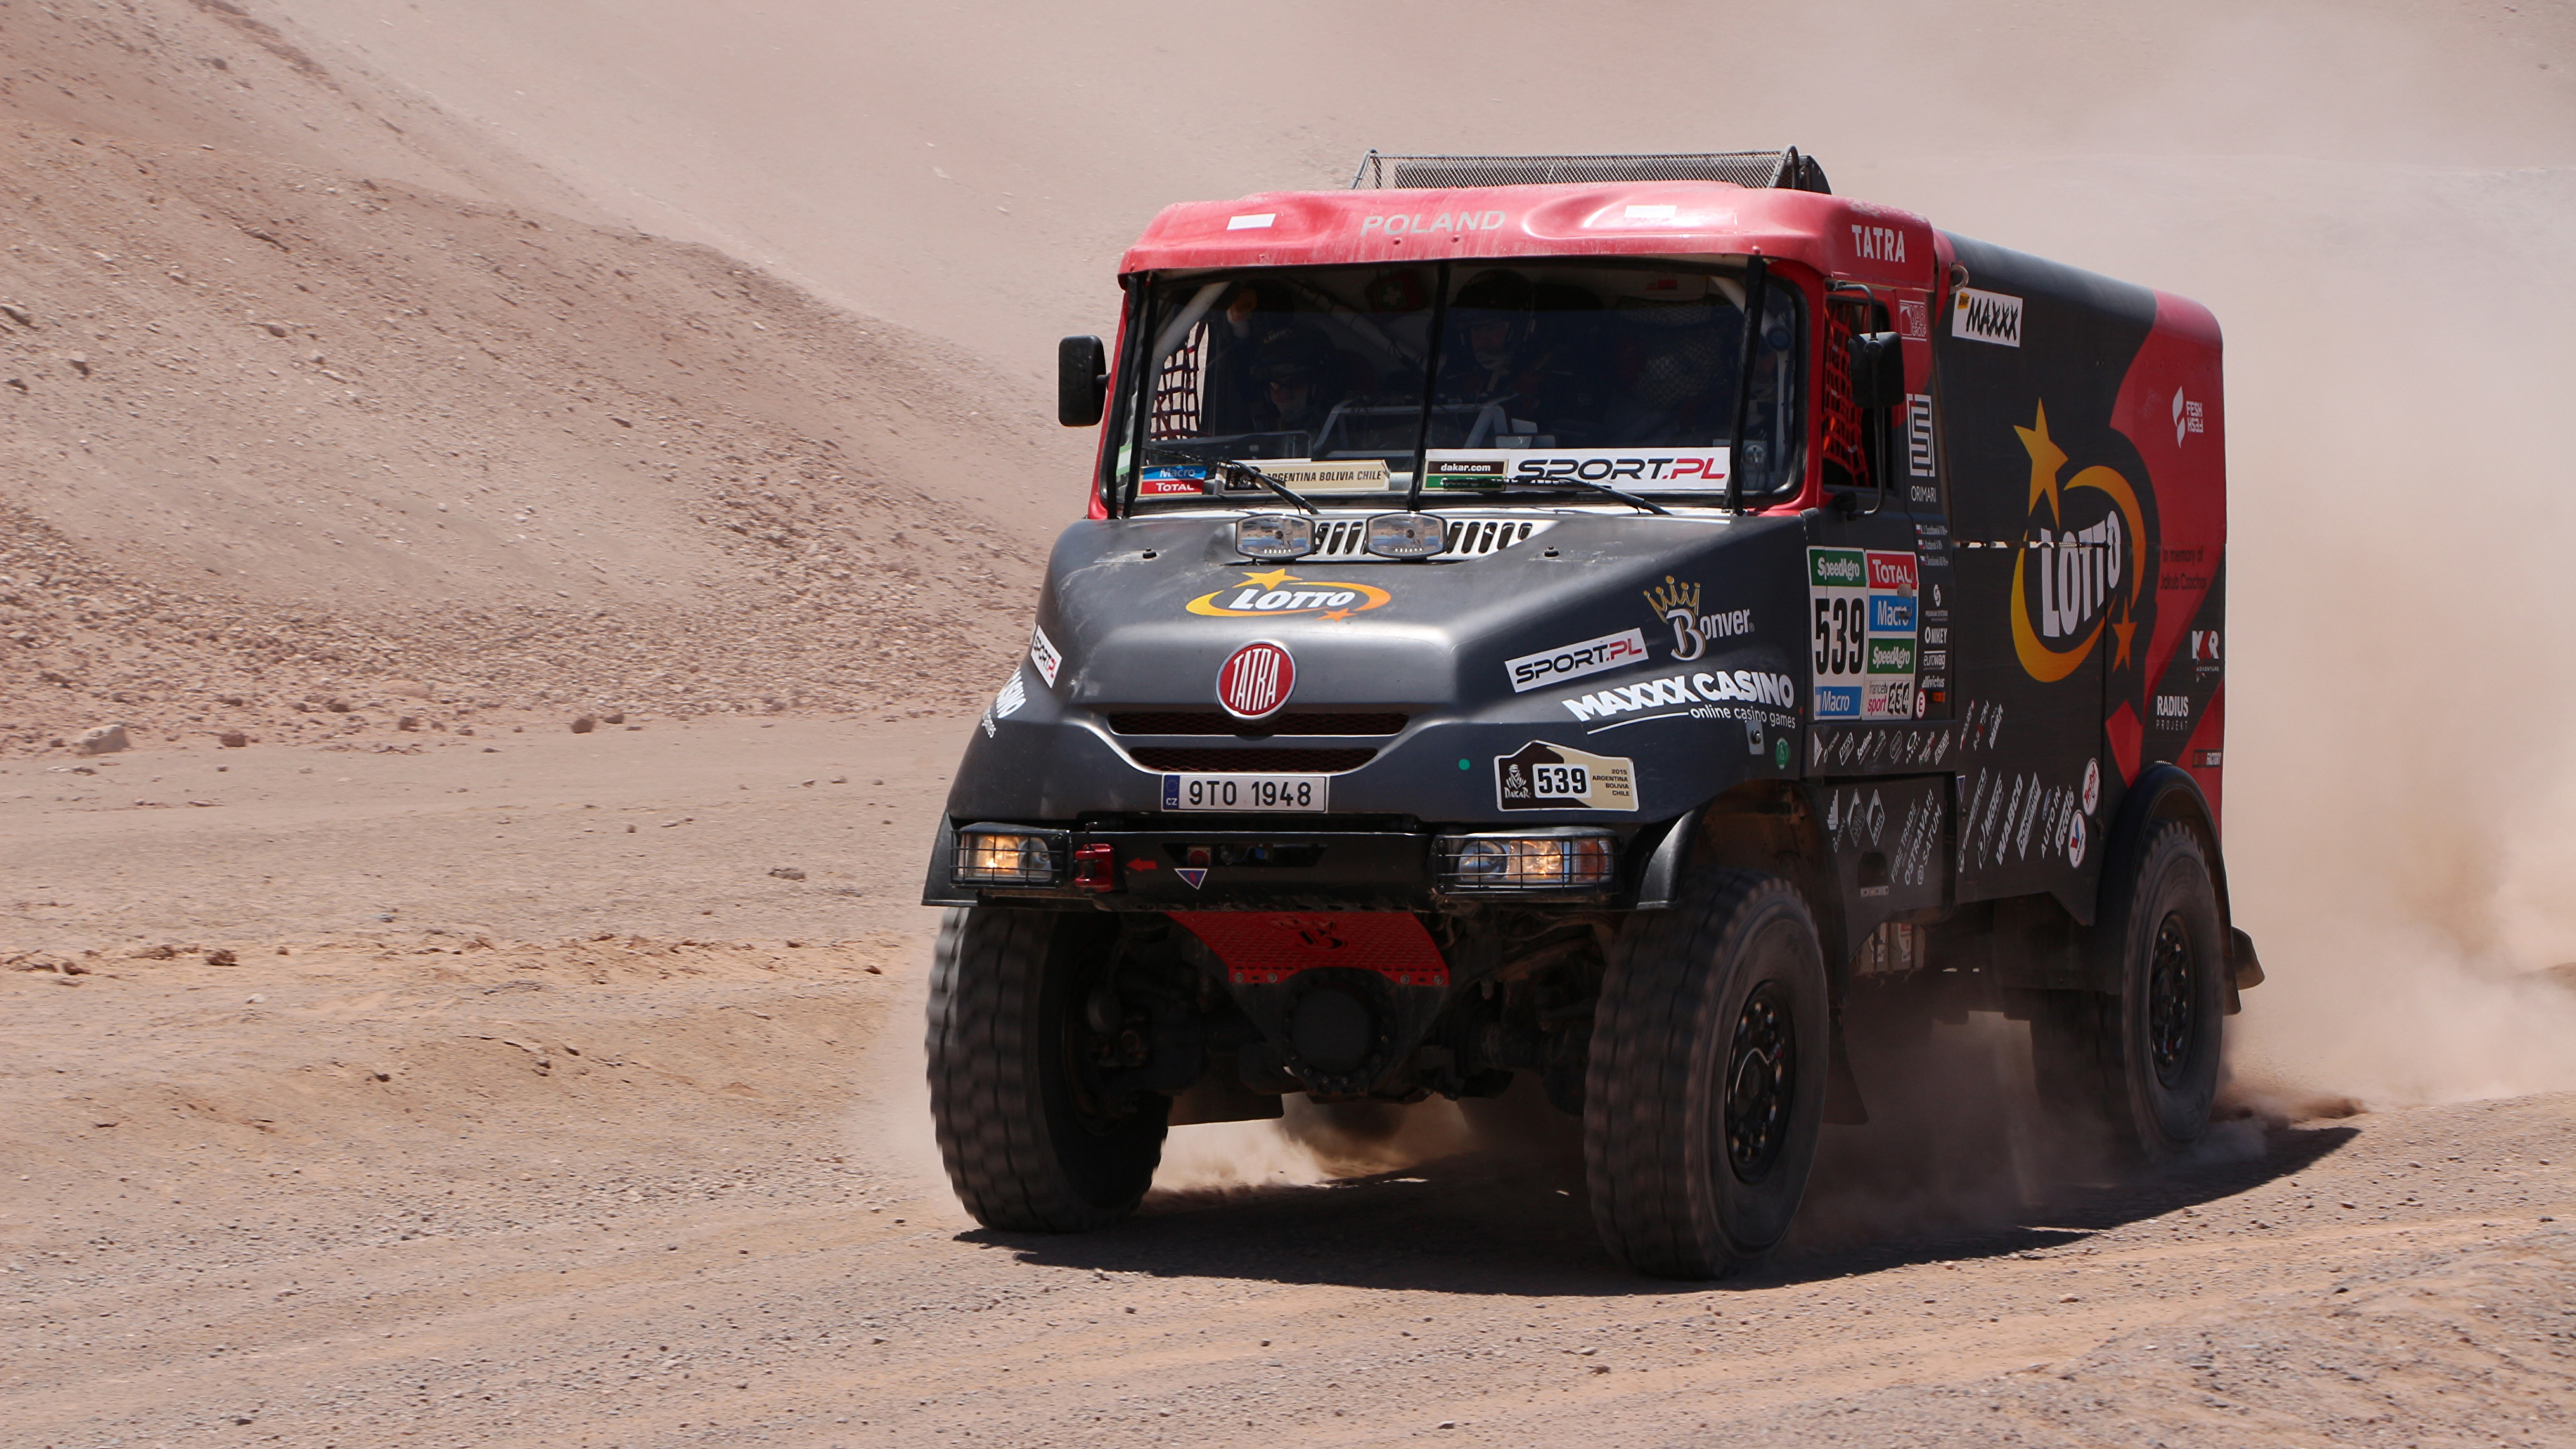 Fondos de Pantalla 3840x2160 Camion Tuning 2014-17 Tatra Jamal Team Bonver  Dakar Project Coches descargar imagenes